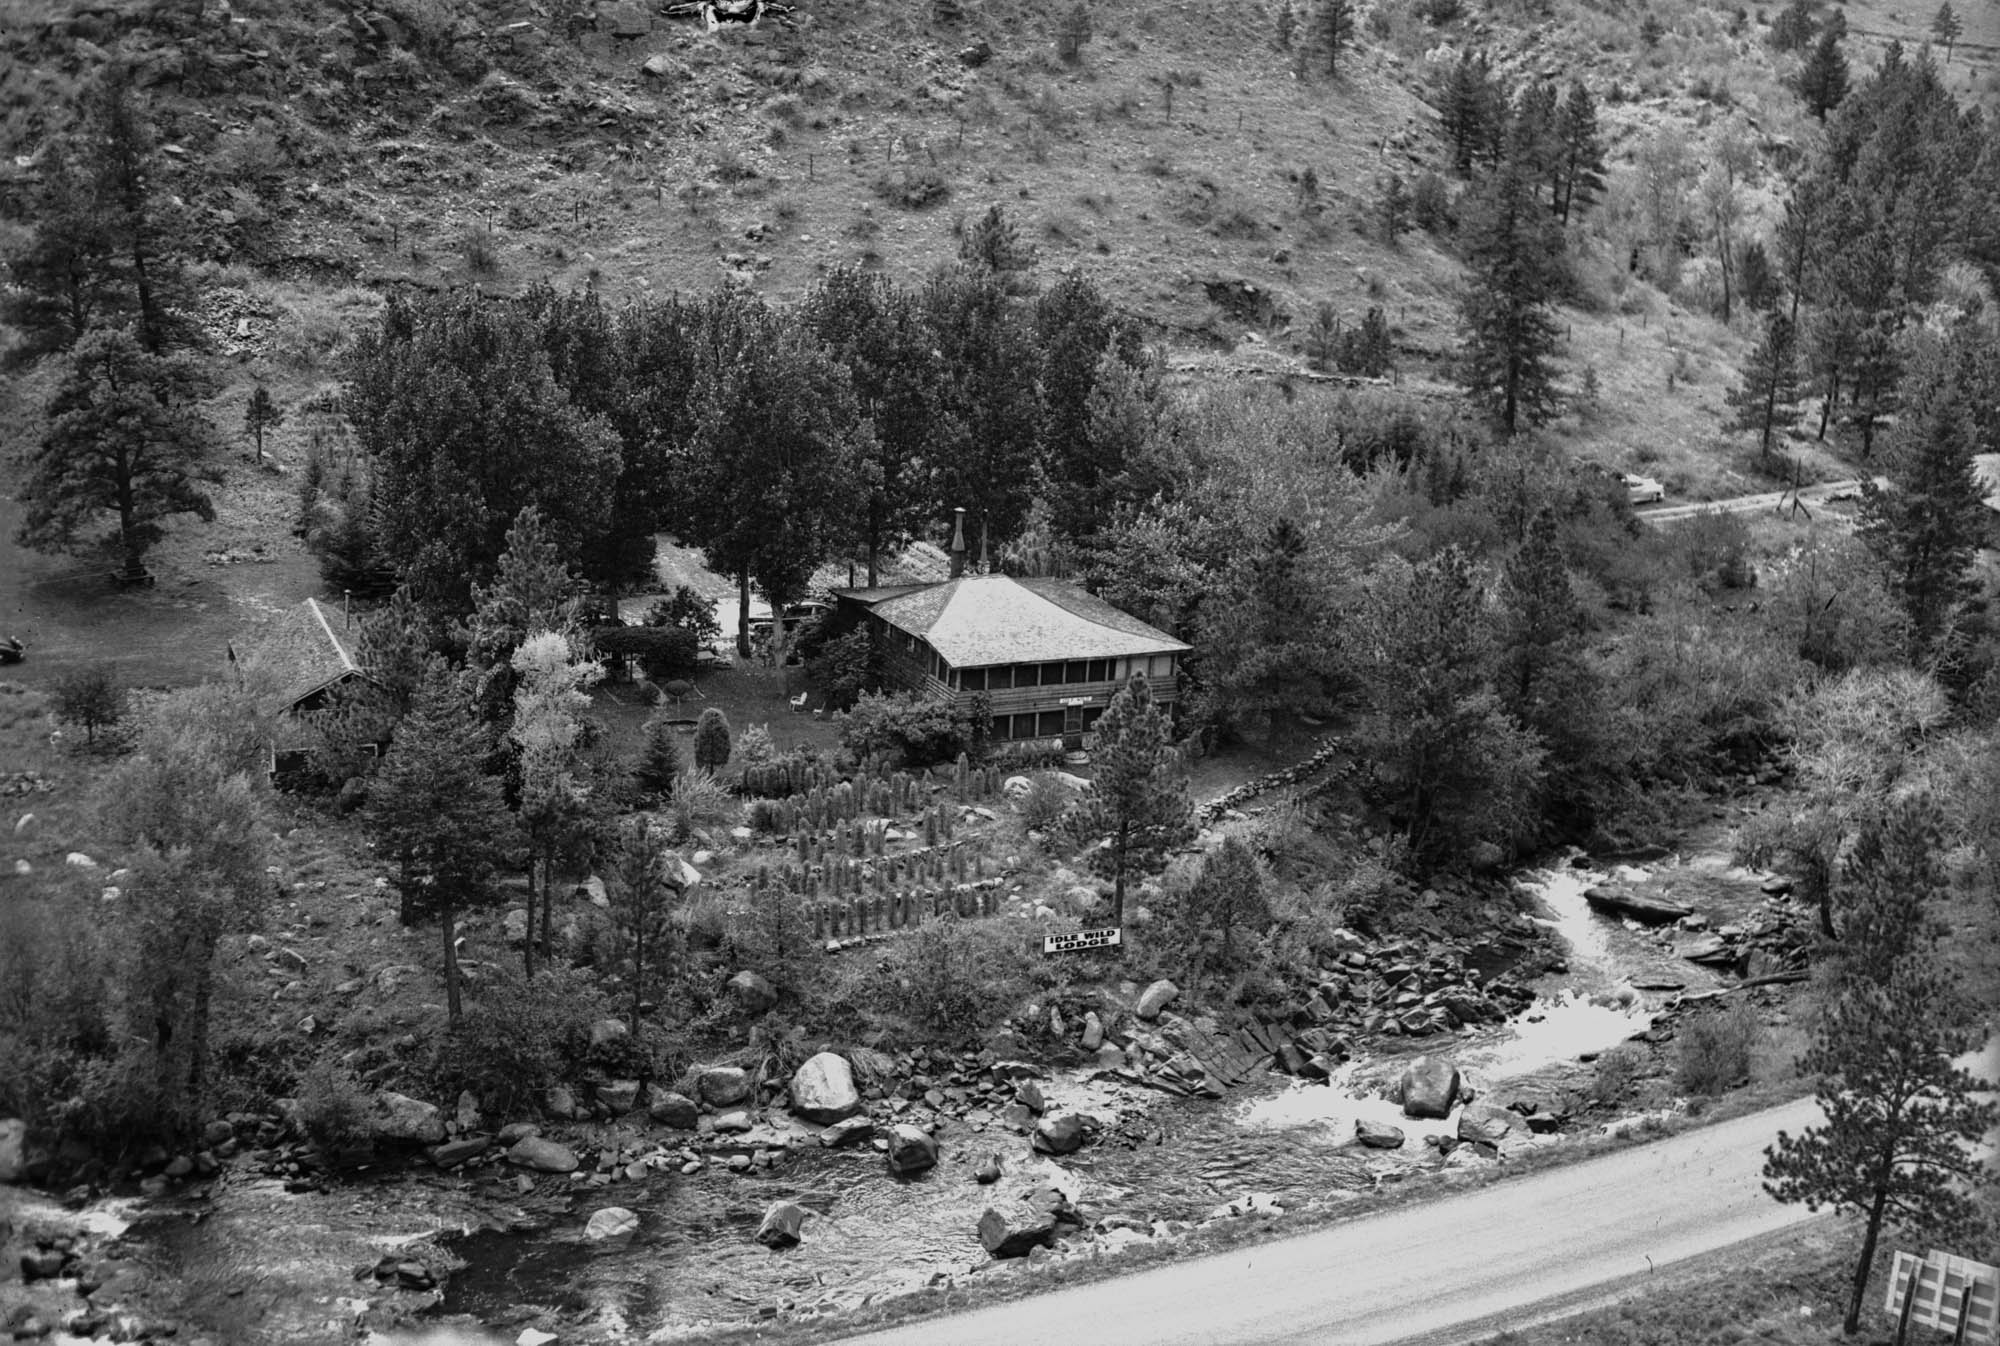 Idlewild Lodge - idlewildlodge.github.io - Circa 1930s - Idlewild Lodge - Looking South